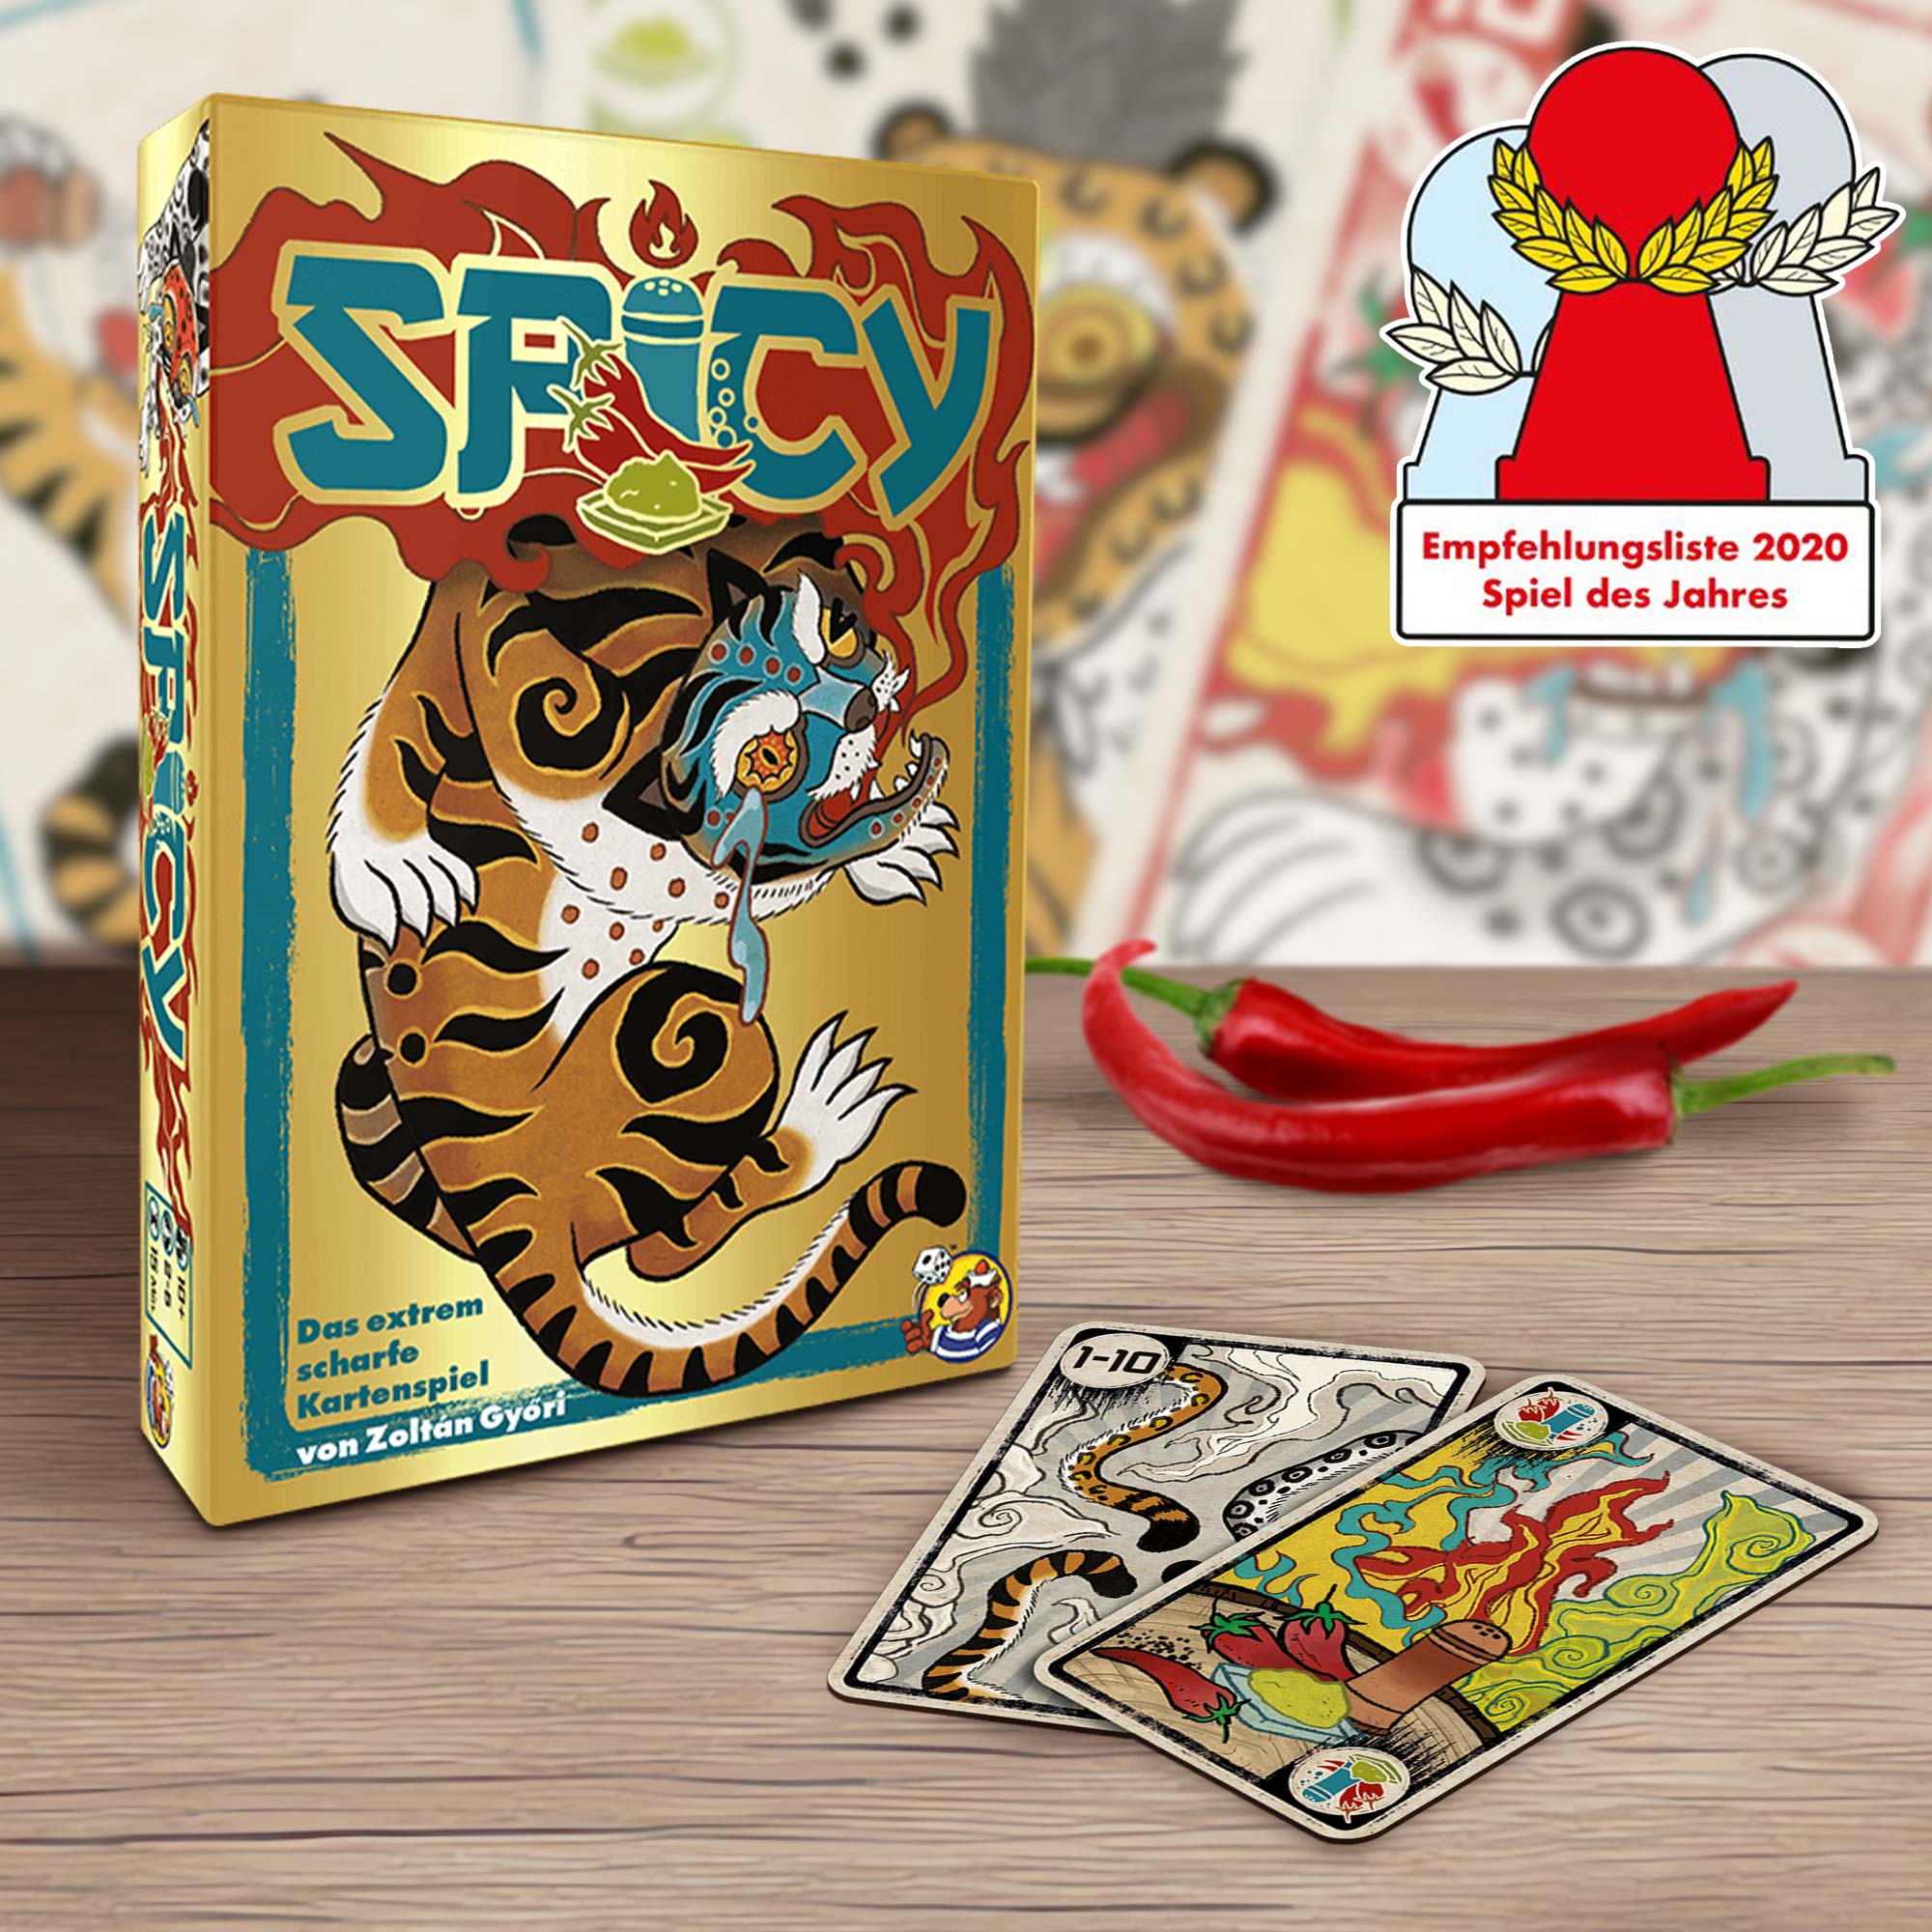 Spicy - Kartenspiel